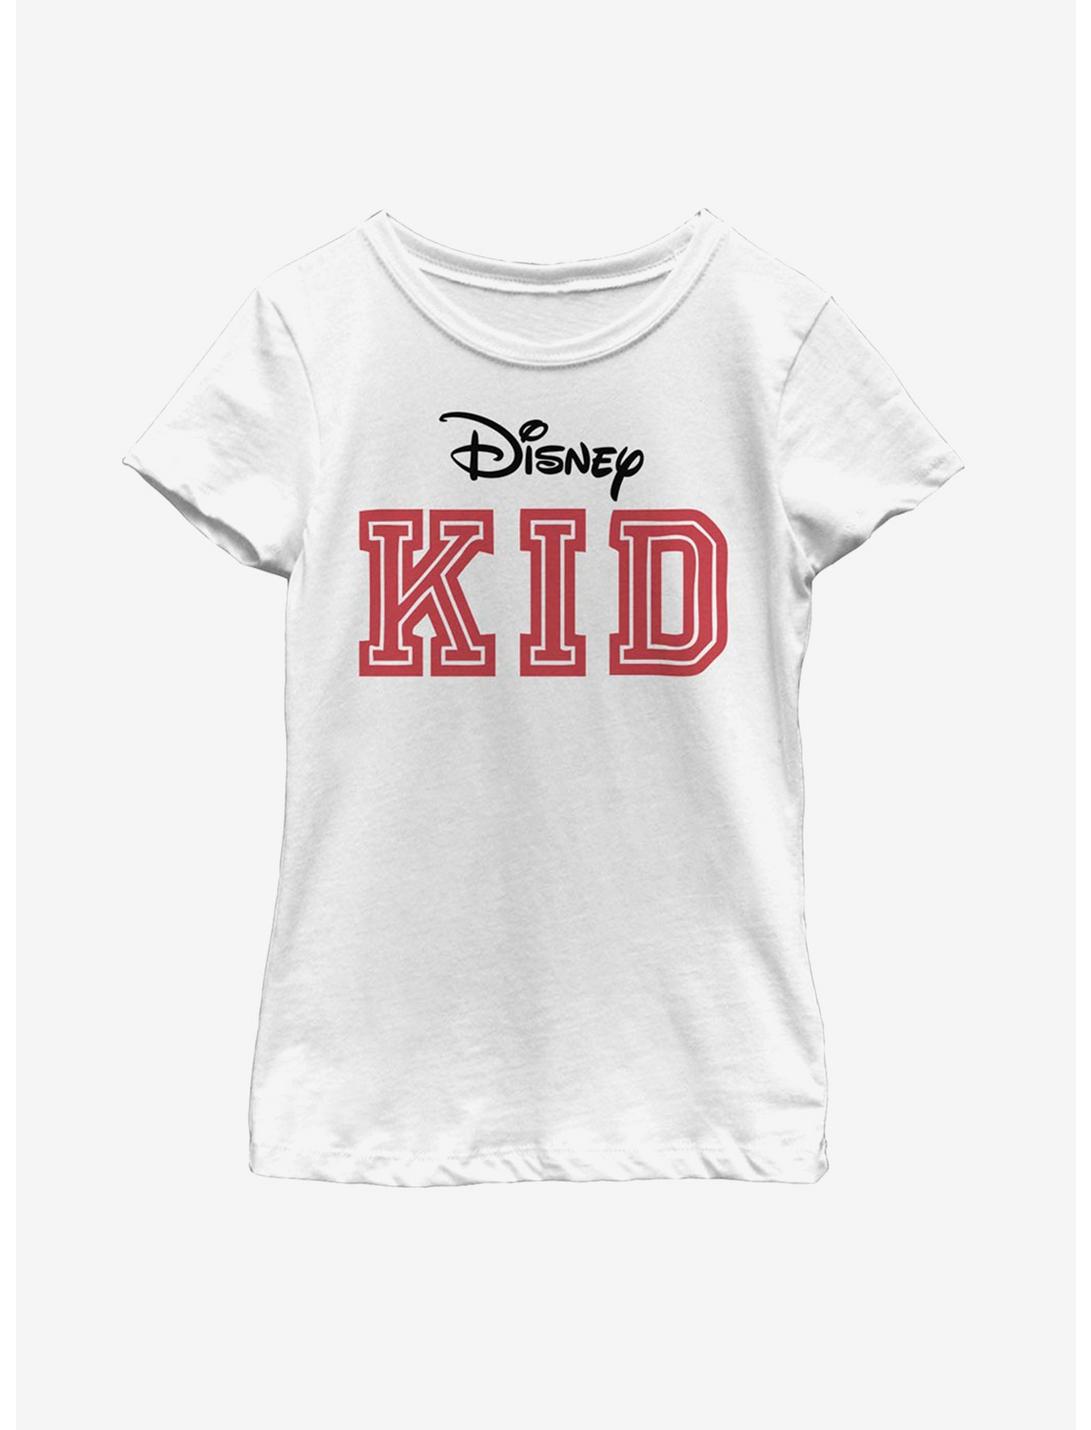 Disney Mickey Mouse Disney Kid Youth Girls T-Shirt, WHITE, hi-res